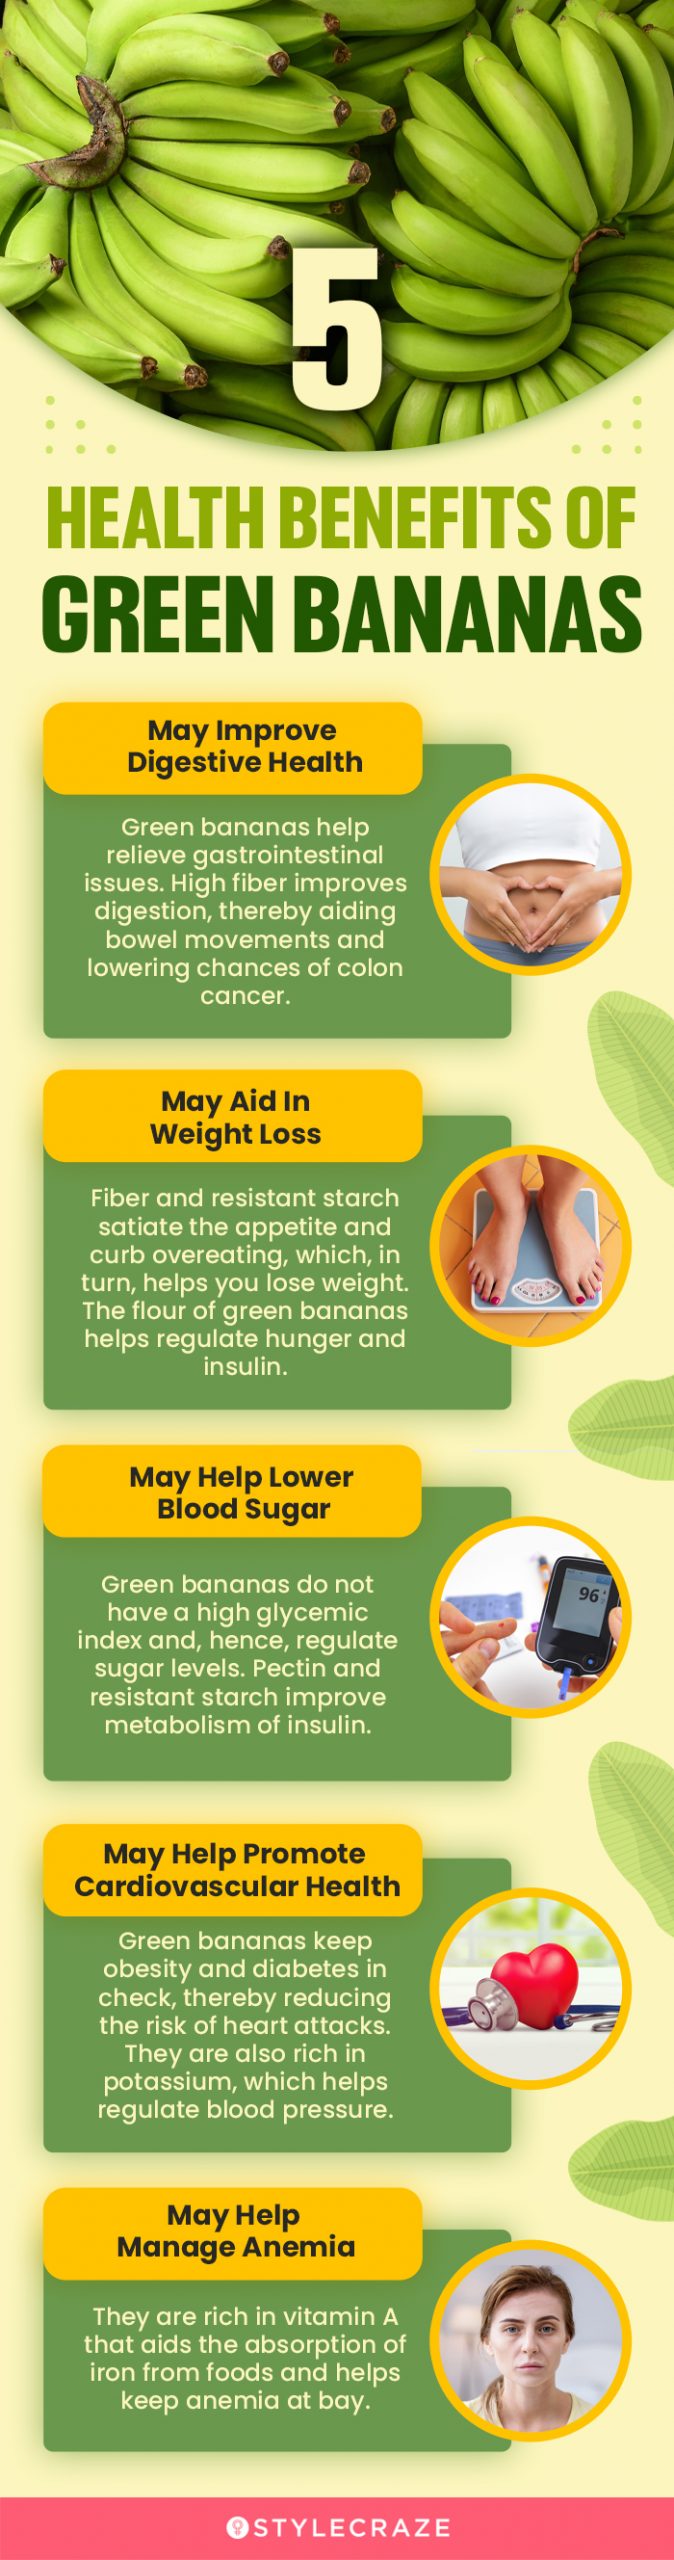 5 health benefits of green bananas [infographic]